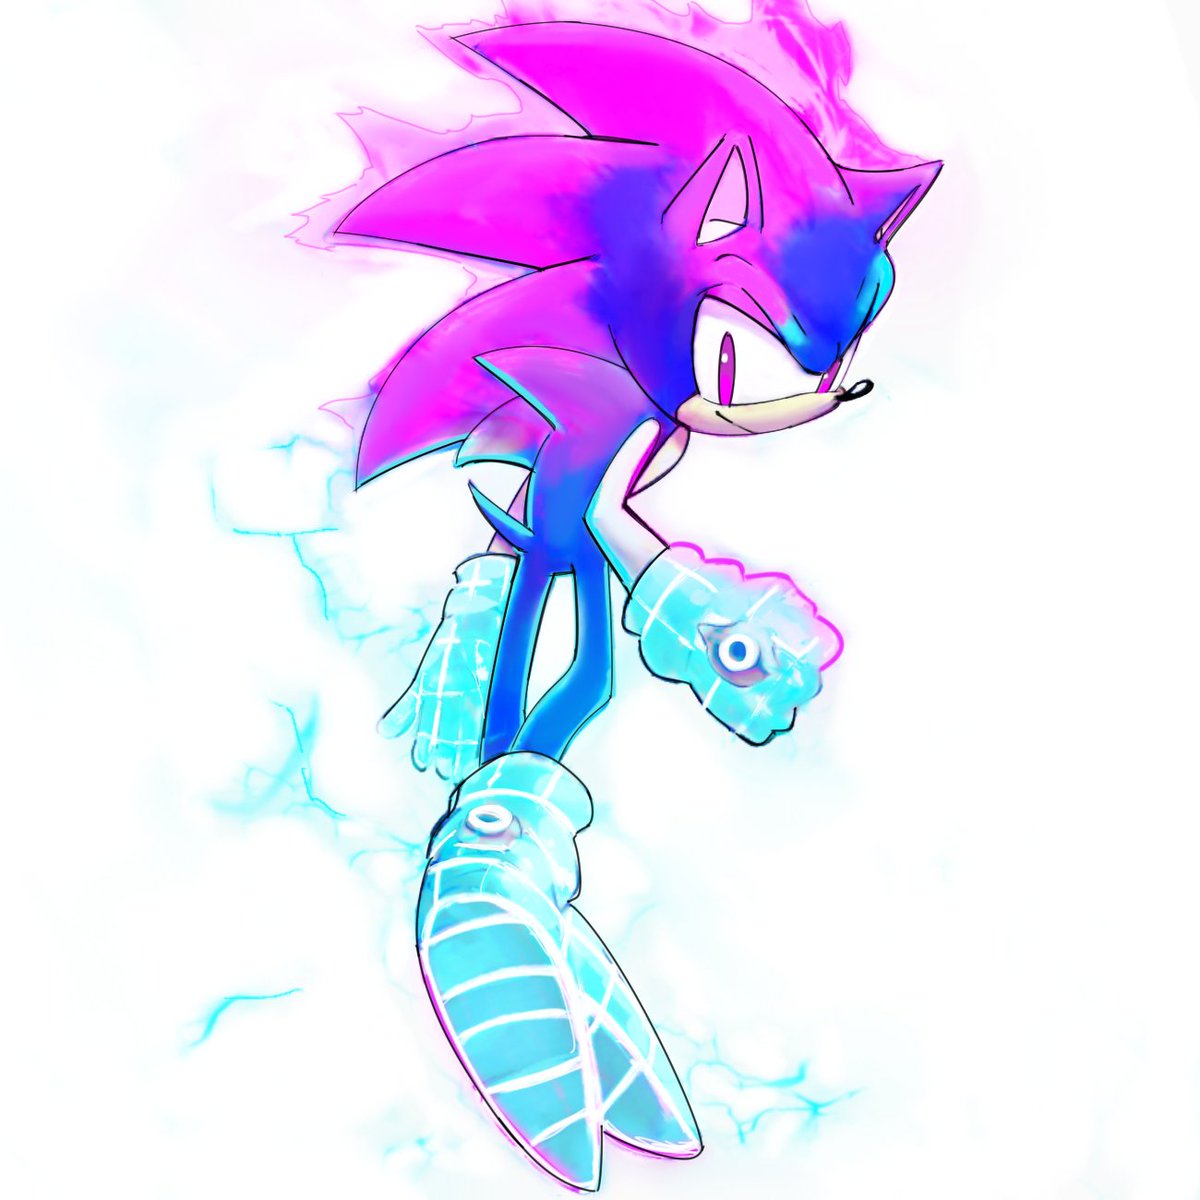 Prism Energy Sonic 🦔
#sonicfanart #SonicTheHedgehog #sonicprime #sonicartist #소닉파란 #ソニック